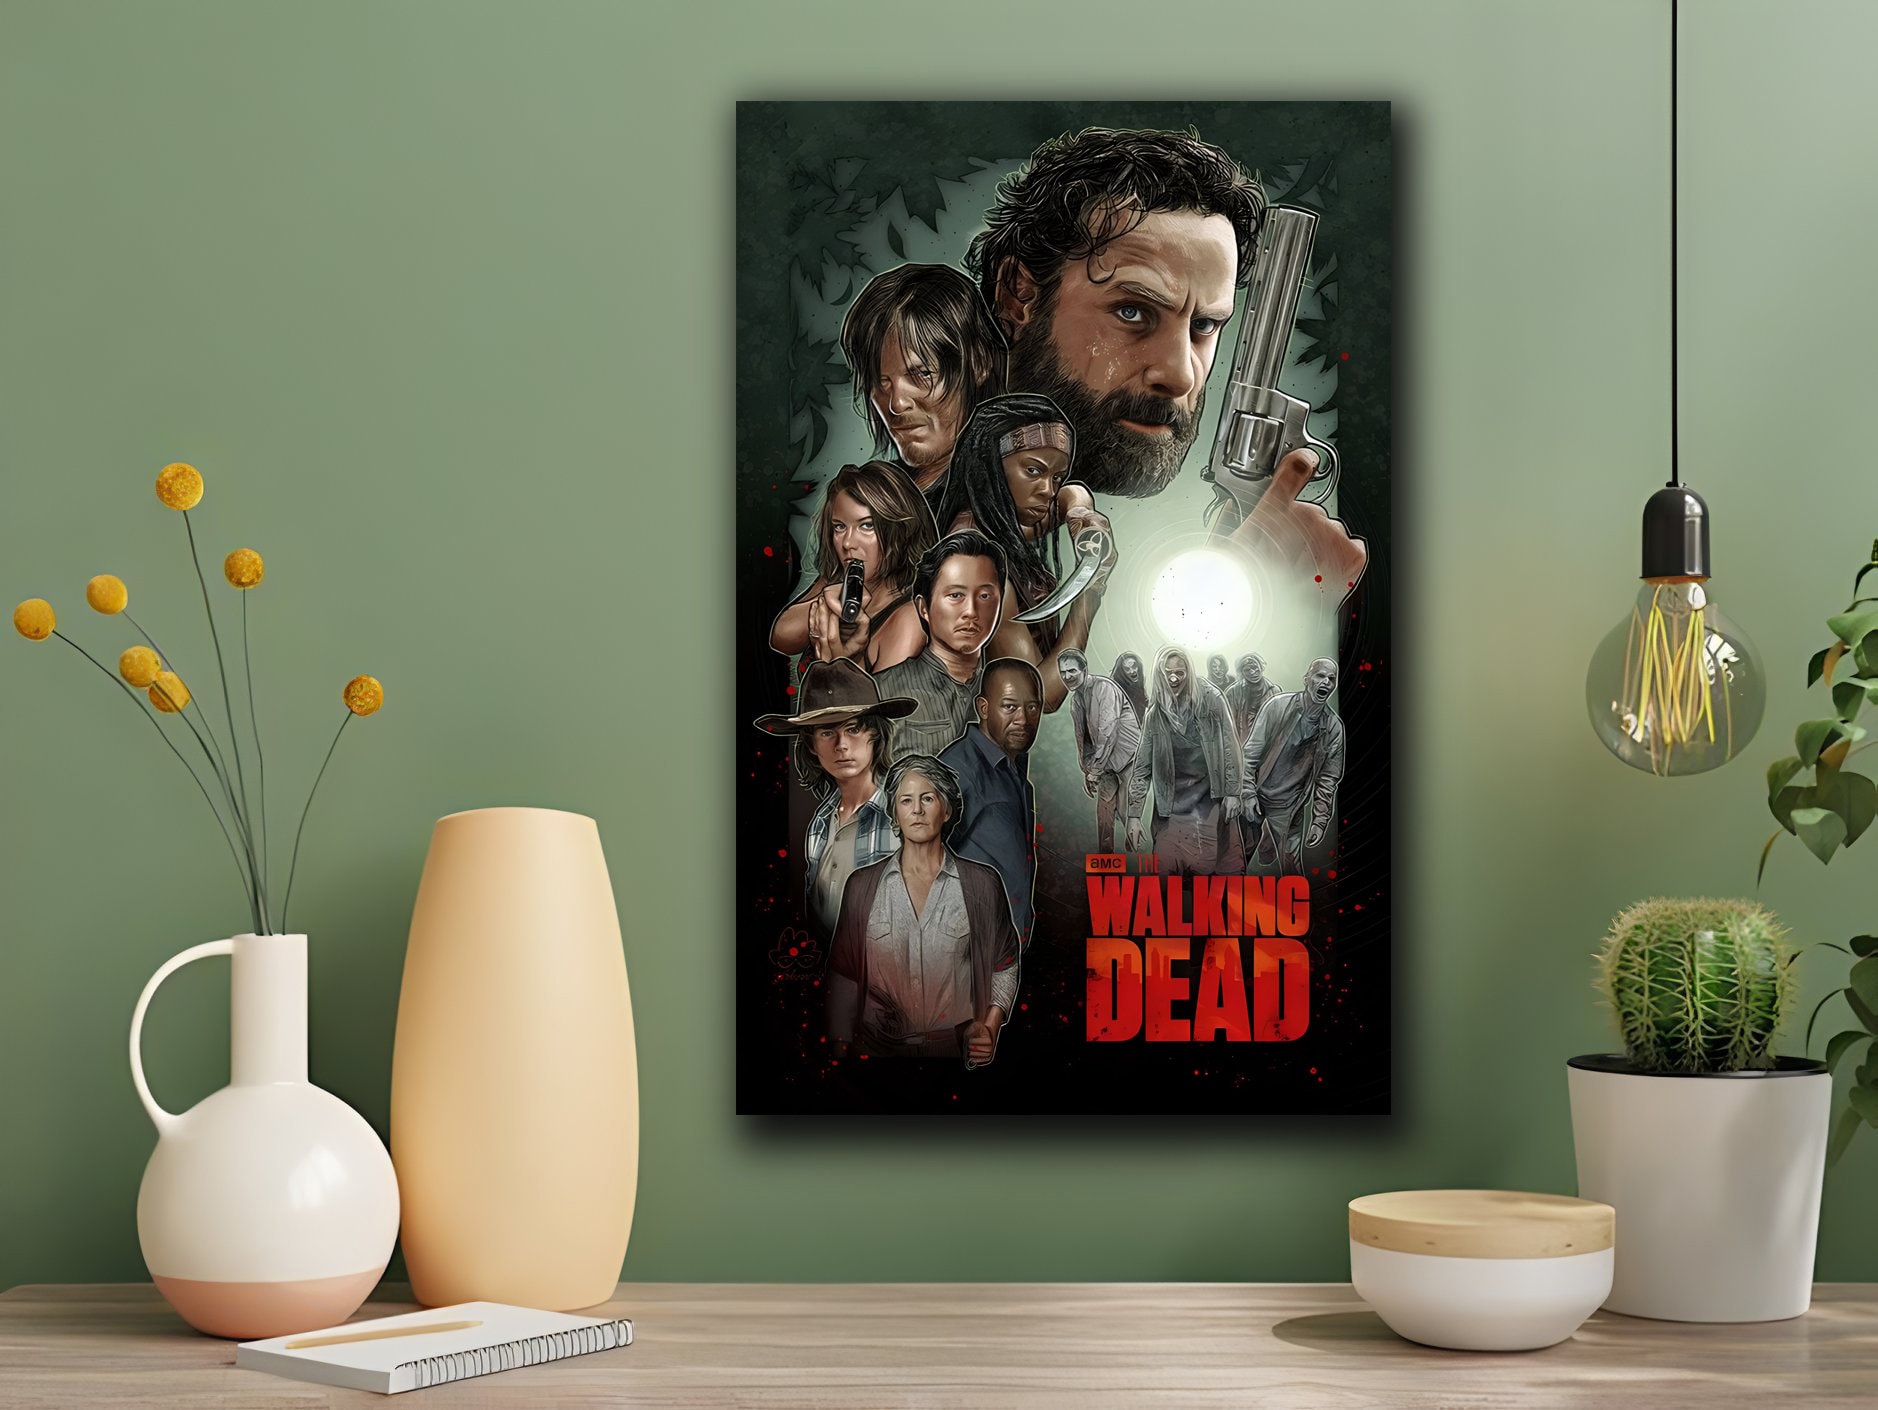 The Walking Dead Twd Season 10 Tv Series Wall Art Home Decor - POSTER 20x30